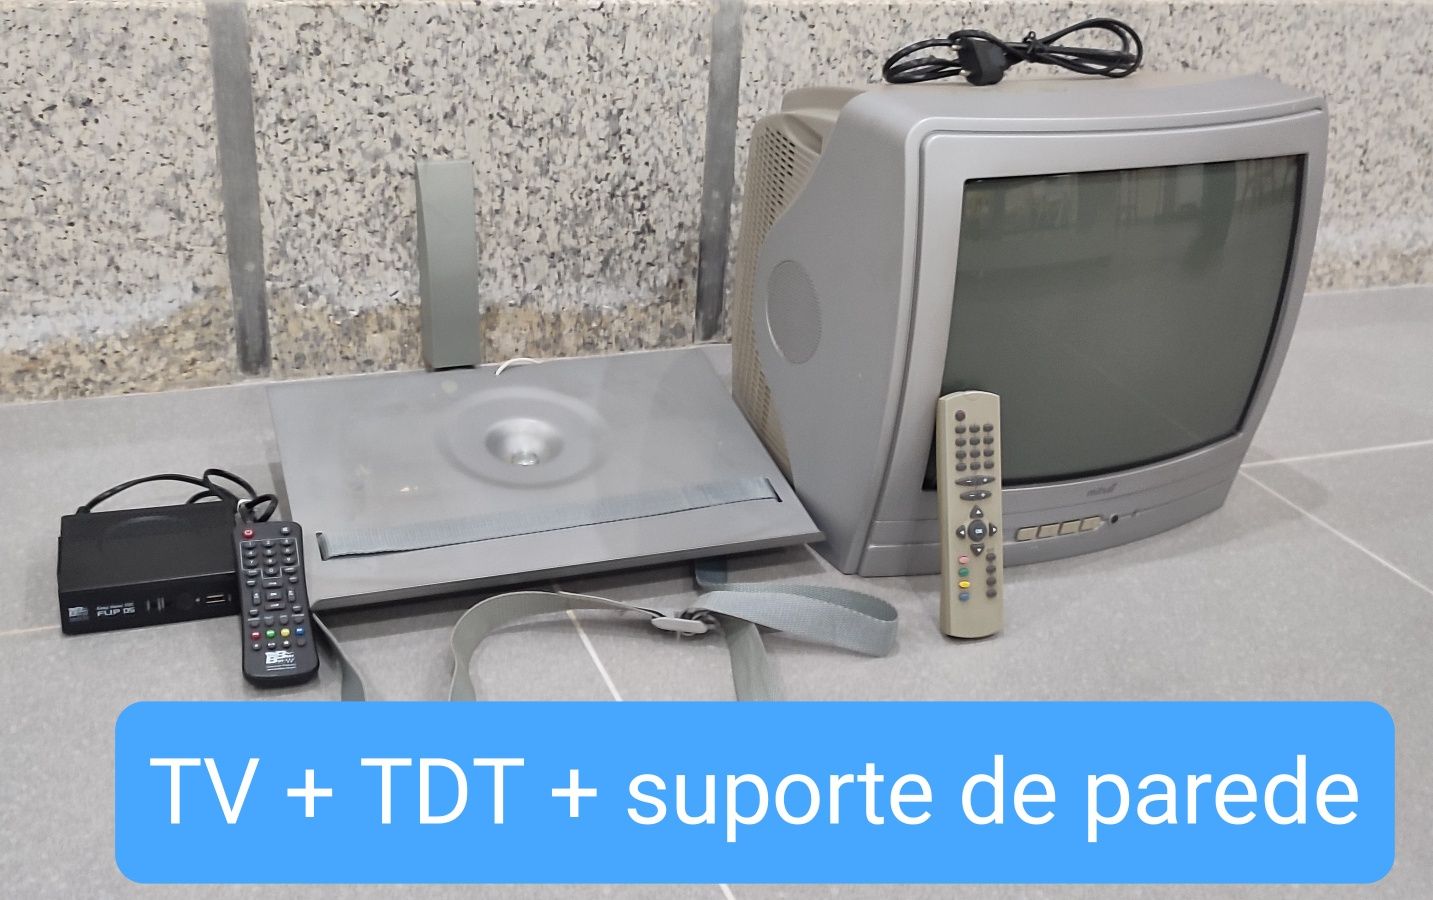 TV ( 35cm) + TDT + suporte de parede